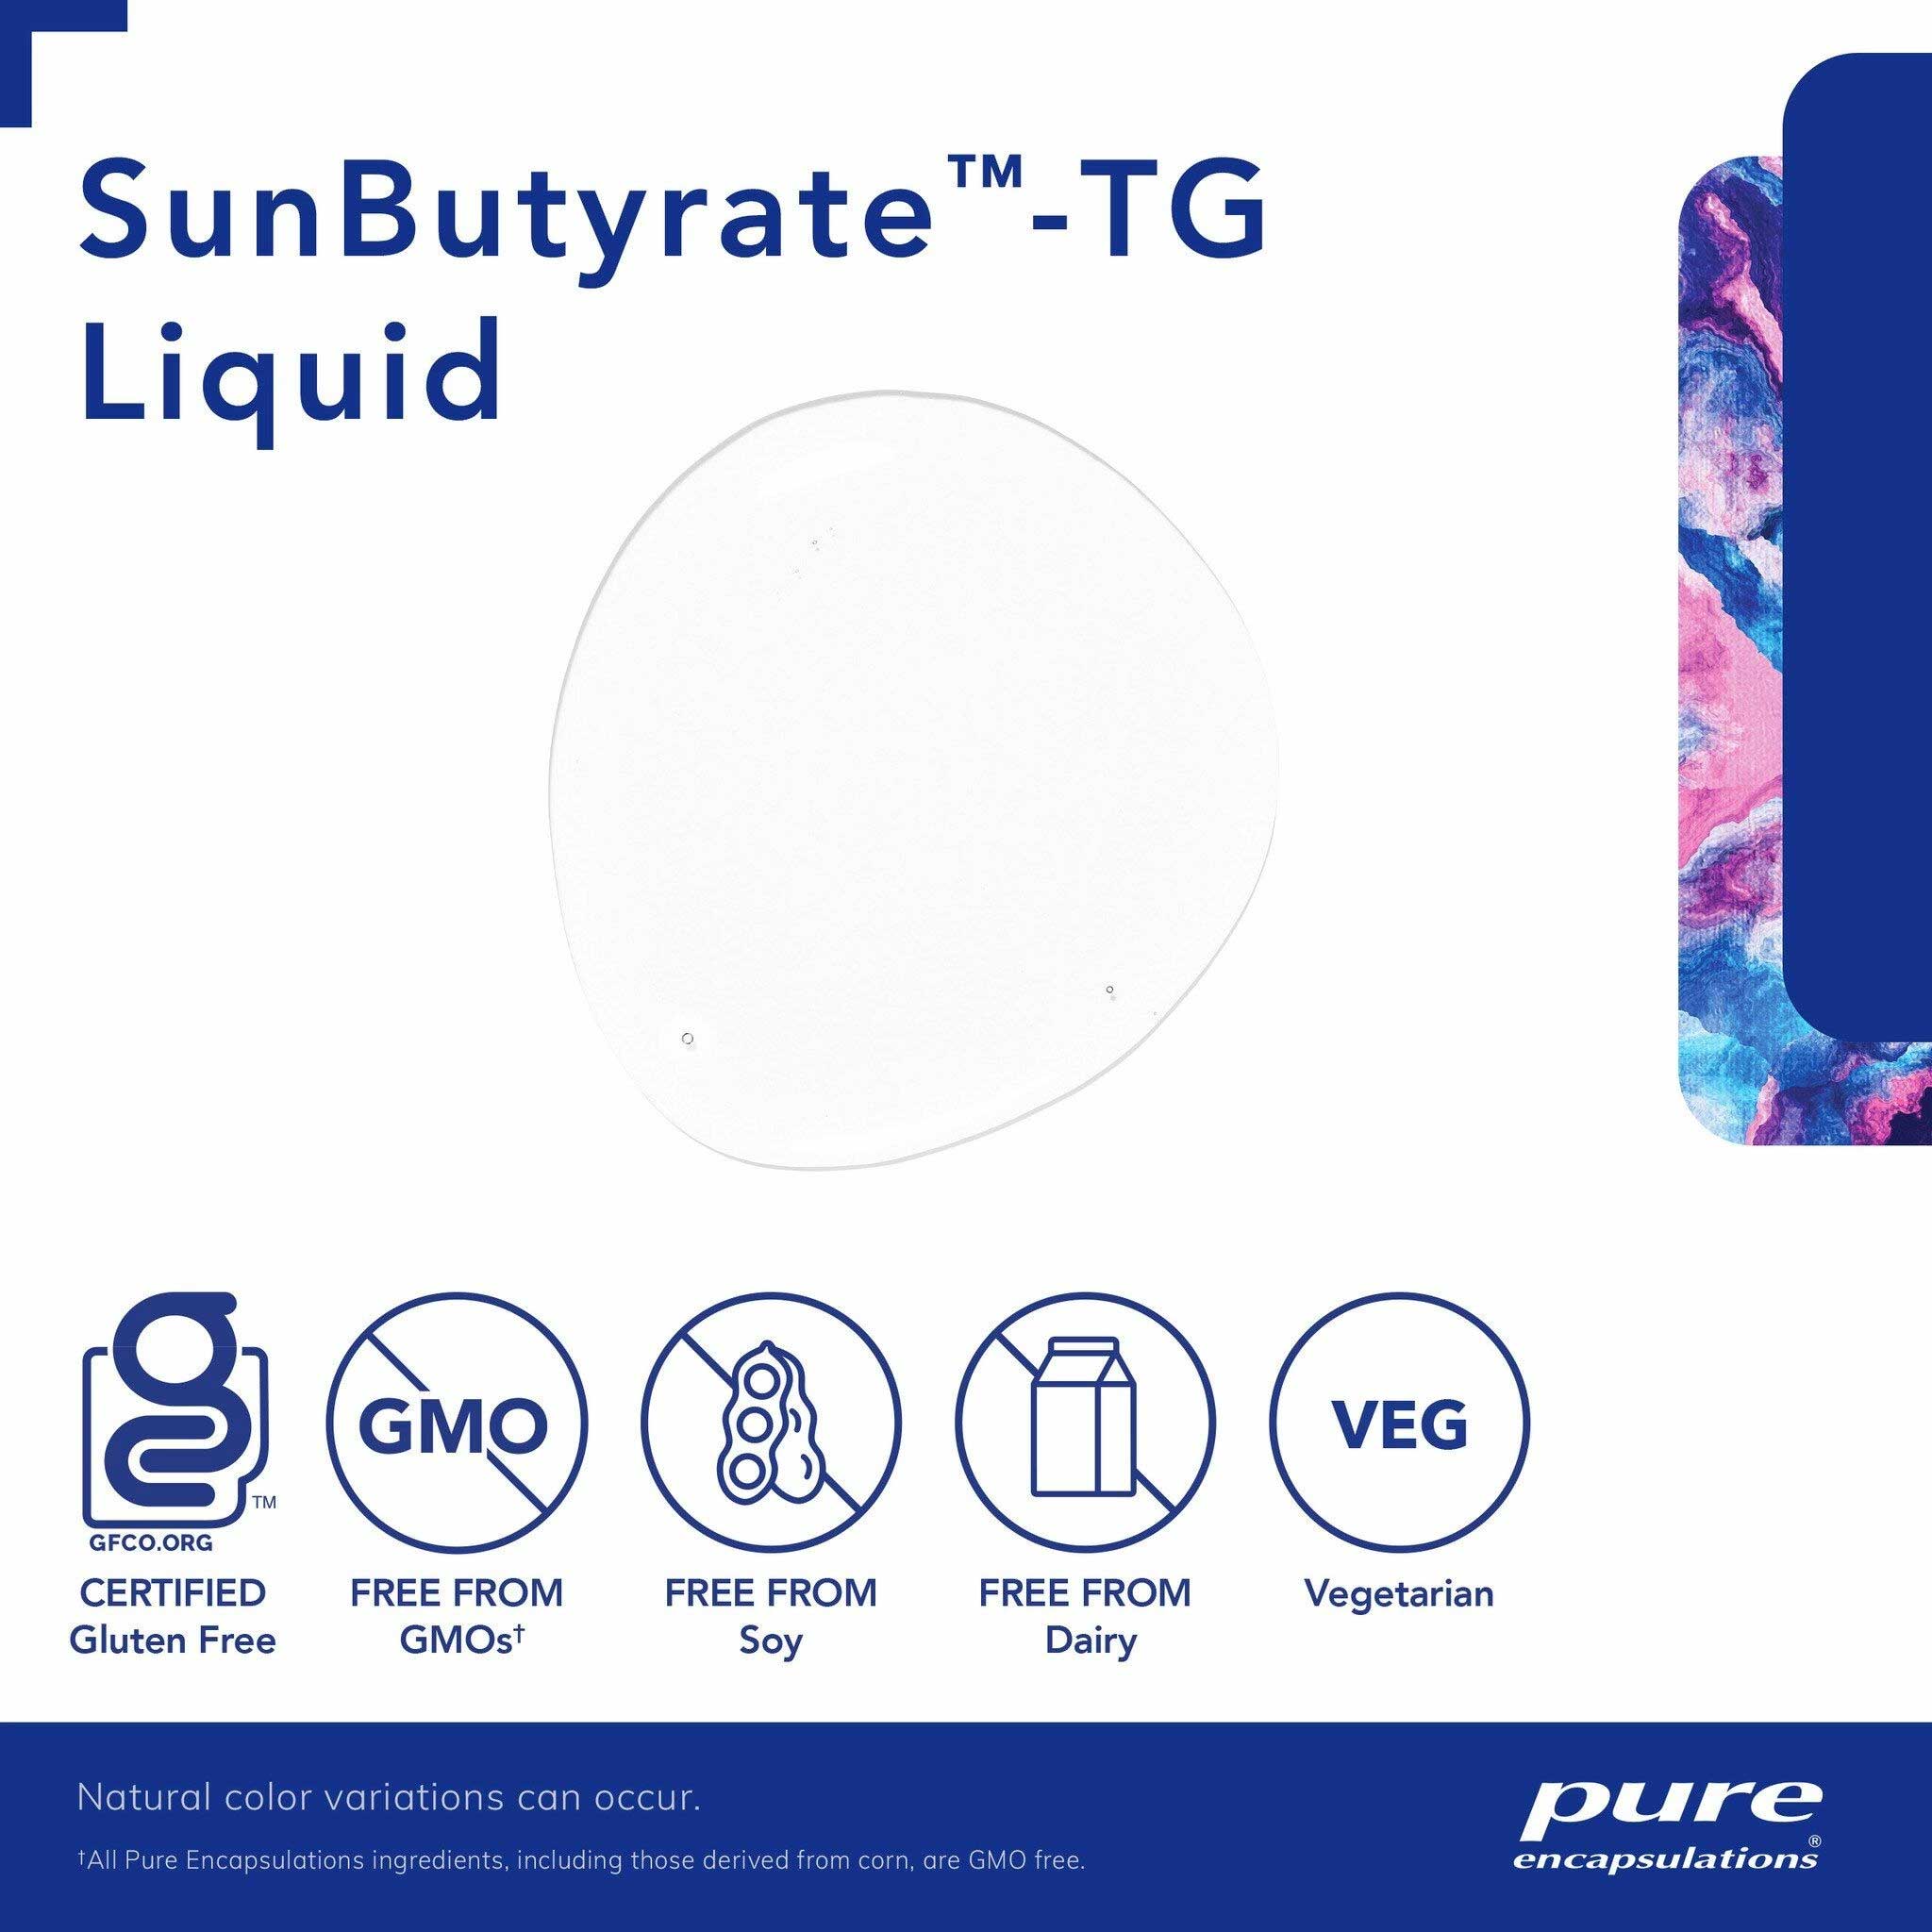 Pure Encapsulations SunButyrate™-TG liquid